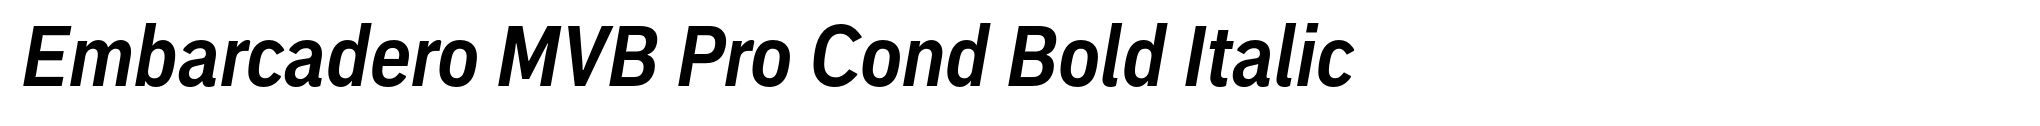 Embarcadero MVB Pro Cond Bold Italic image